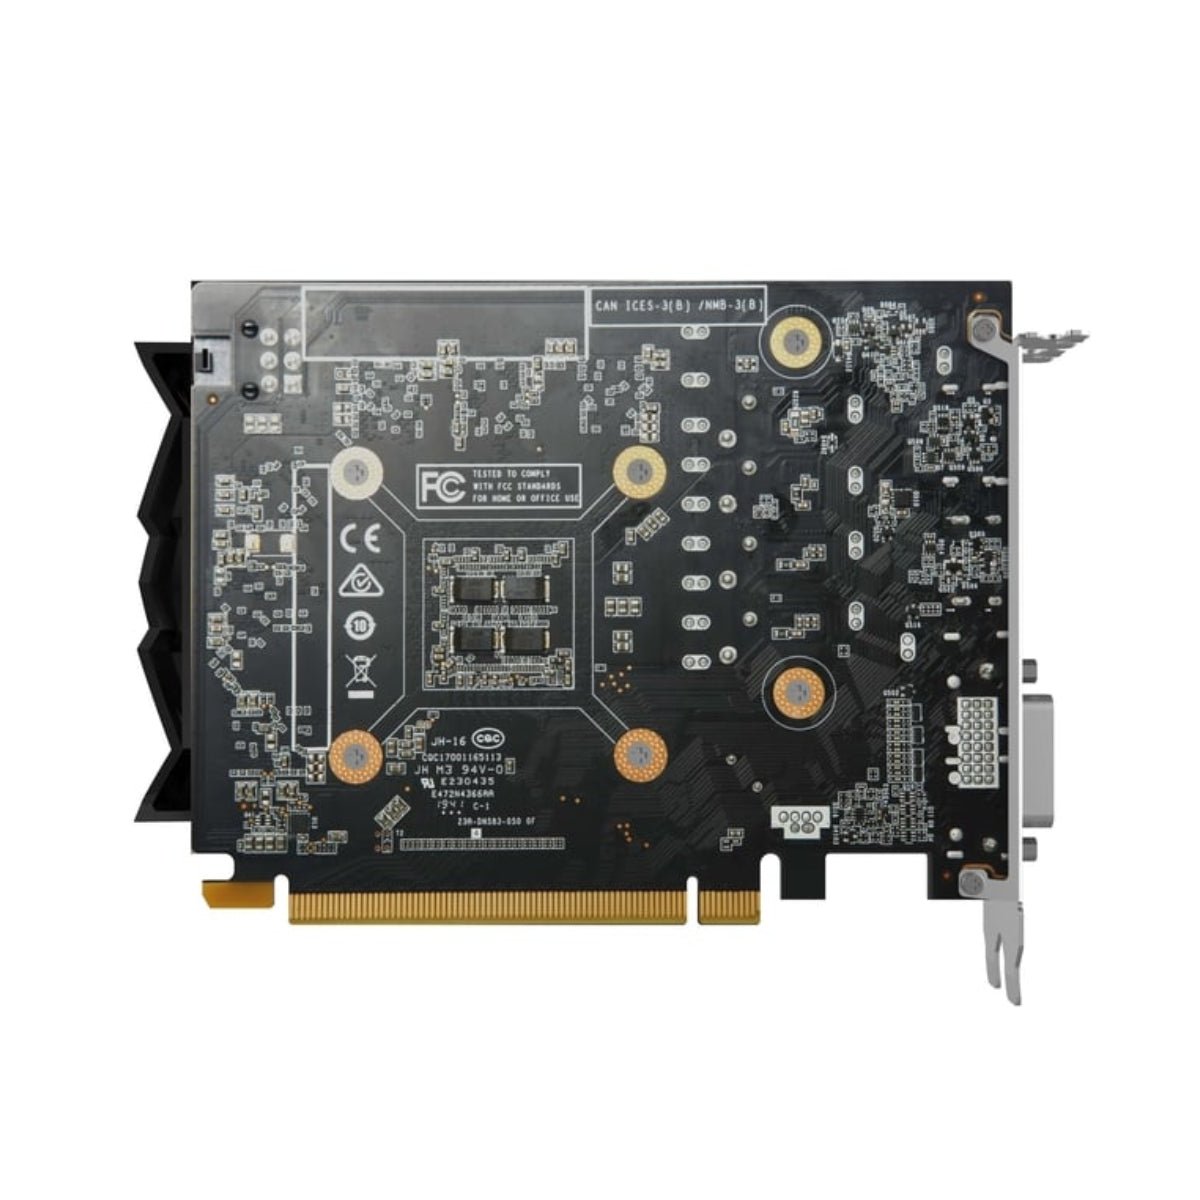 Zotac Gaming GTX 1650 AMP 4GB GDDR6 PCI-E Gen 3x4 - Graphics Card - كرت الشاشة - Store 974 | ستور ٩٧٤